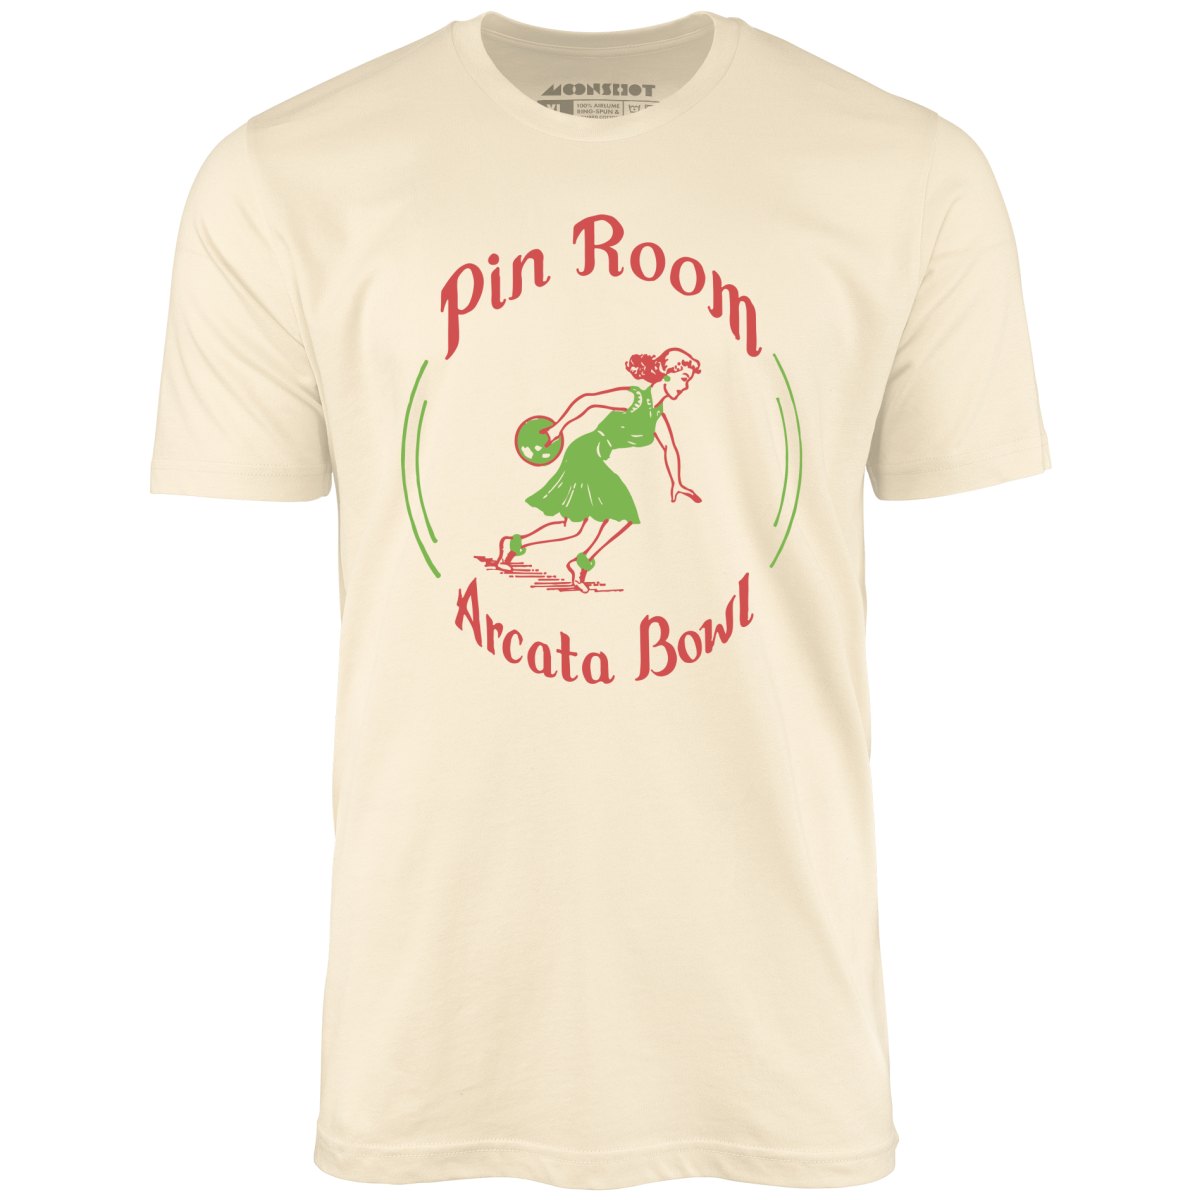 Arcata Bowl Pin Room - Arcata, CA - Vintage Bowling Alley - Unisex T-Shirt